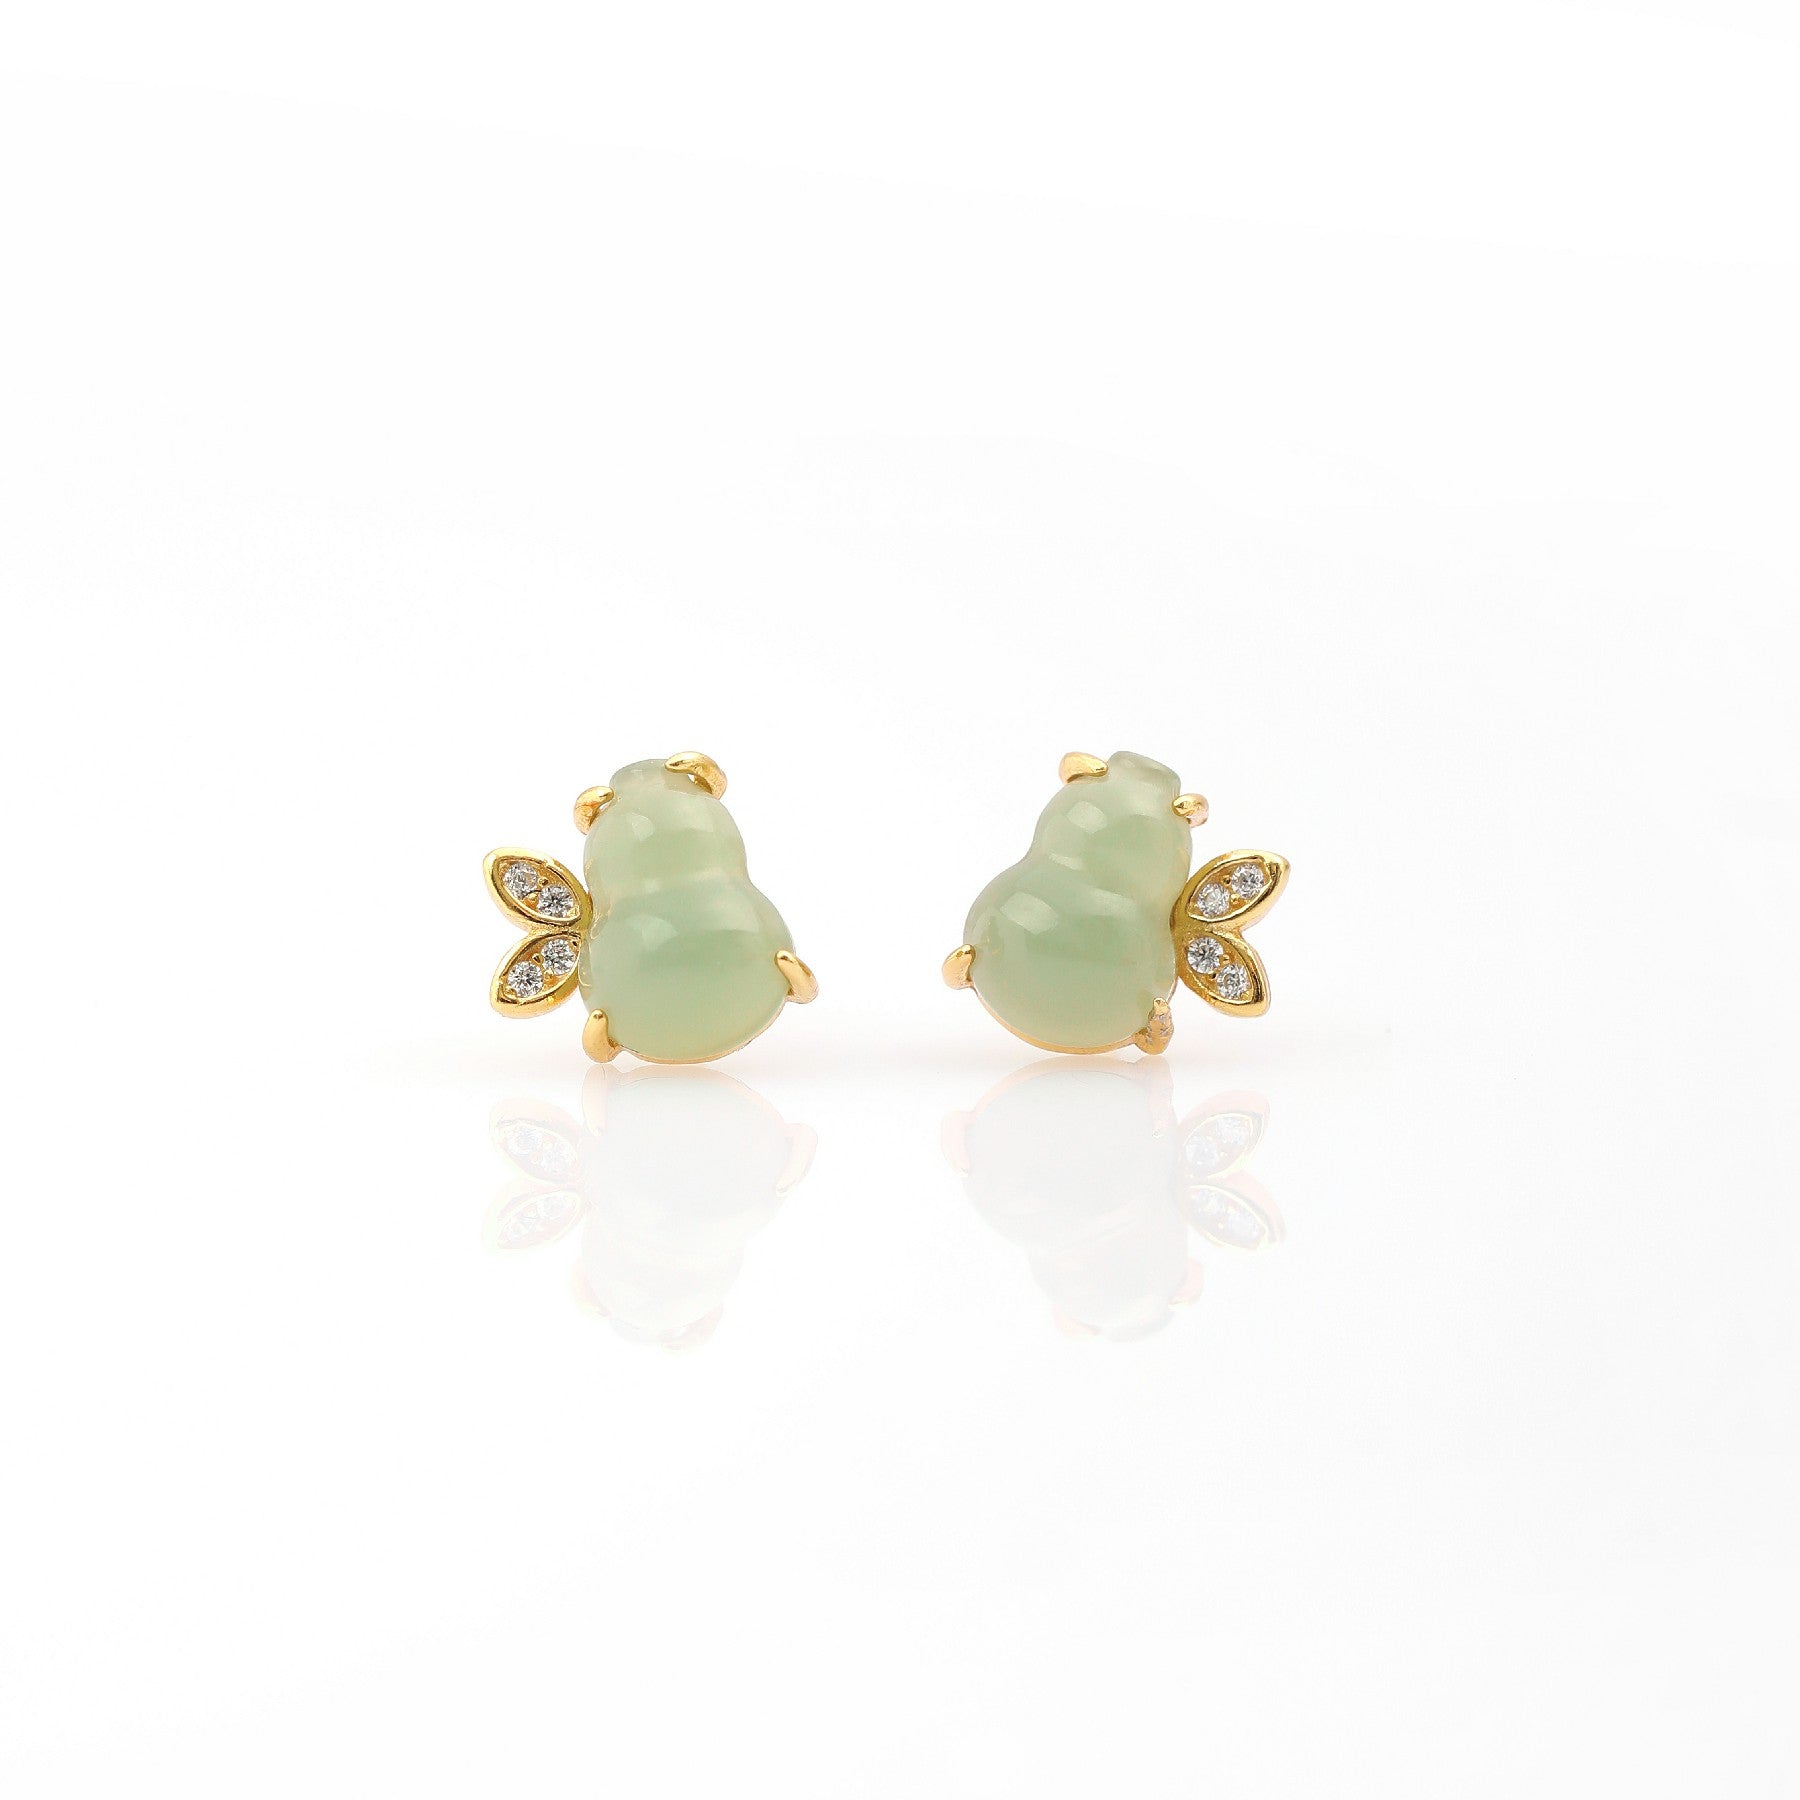 The bee shaped Green Hetian Jade earrings